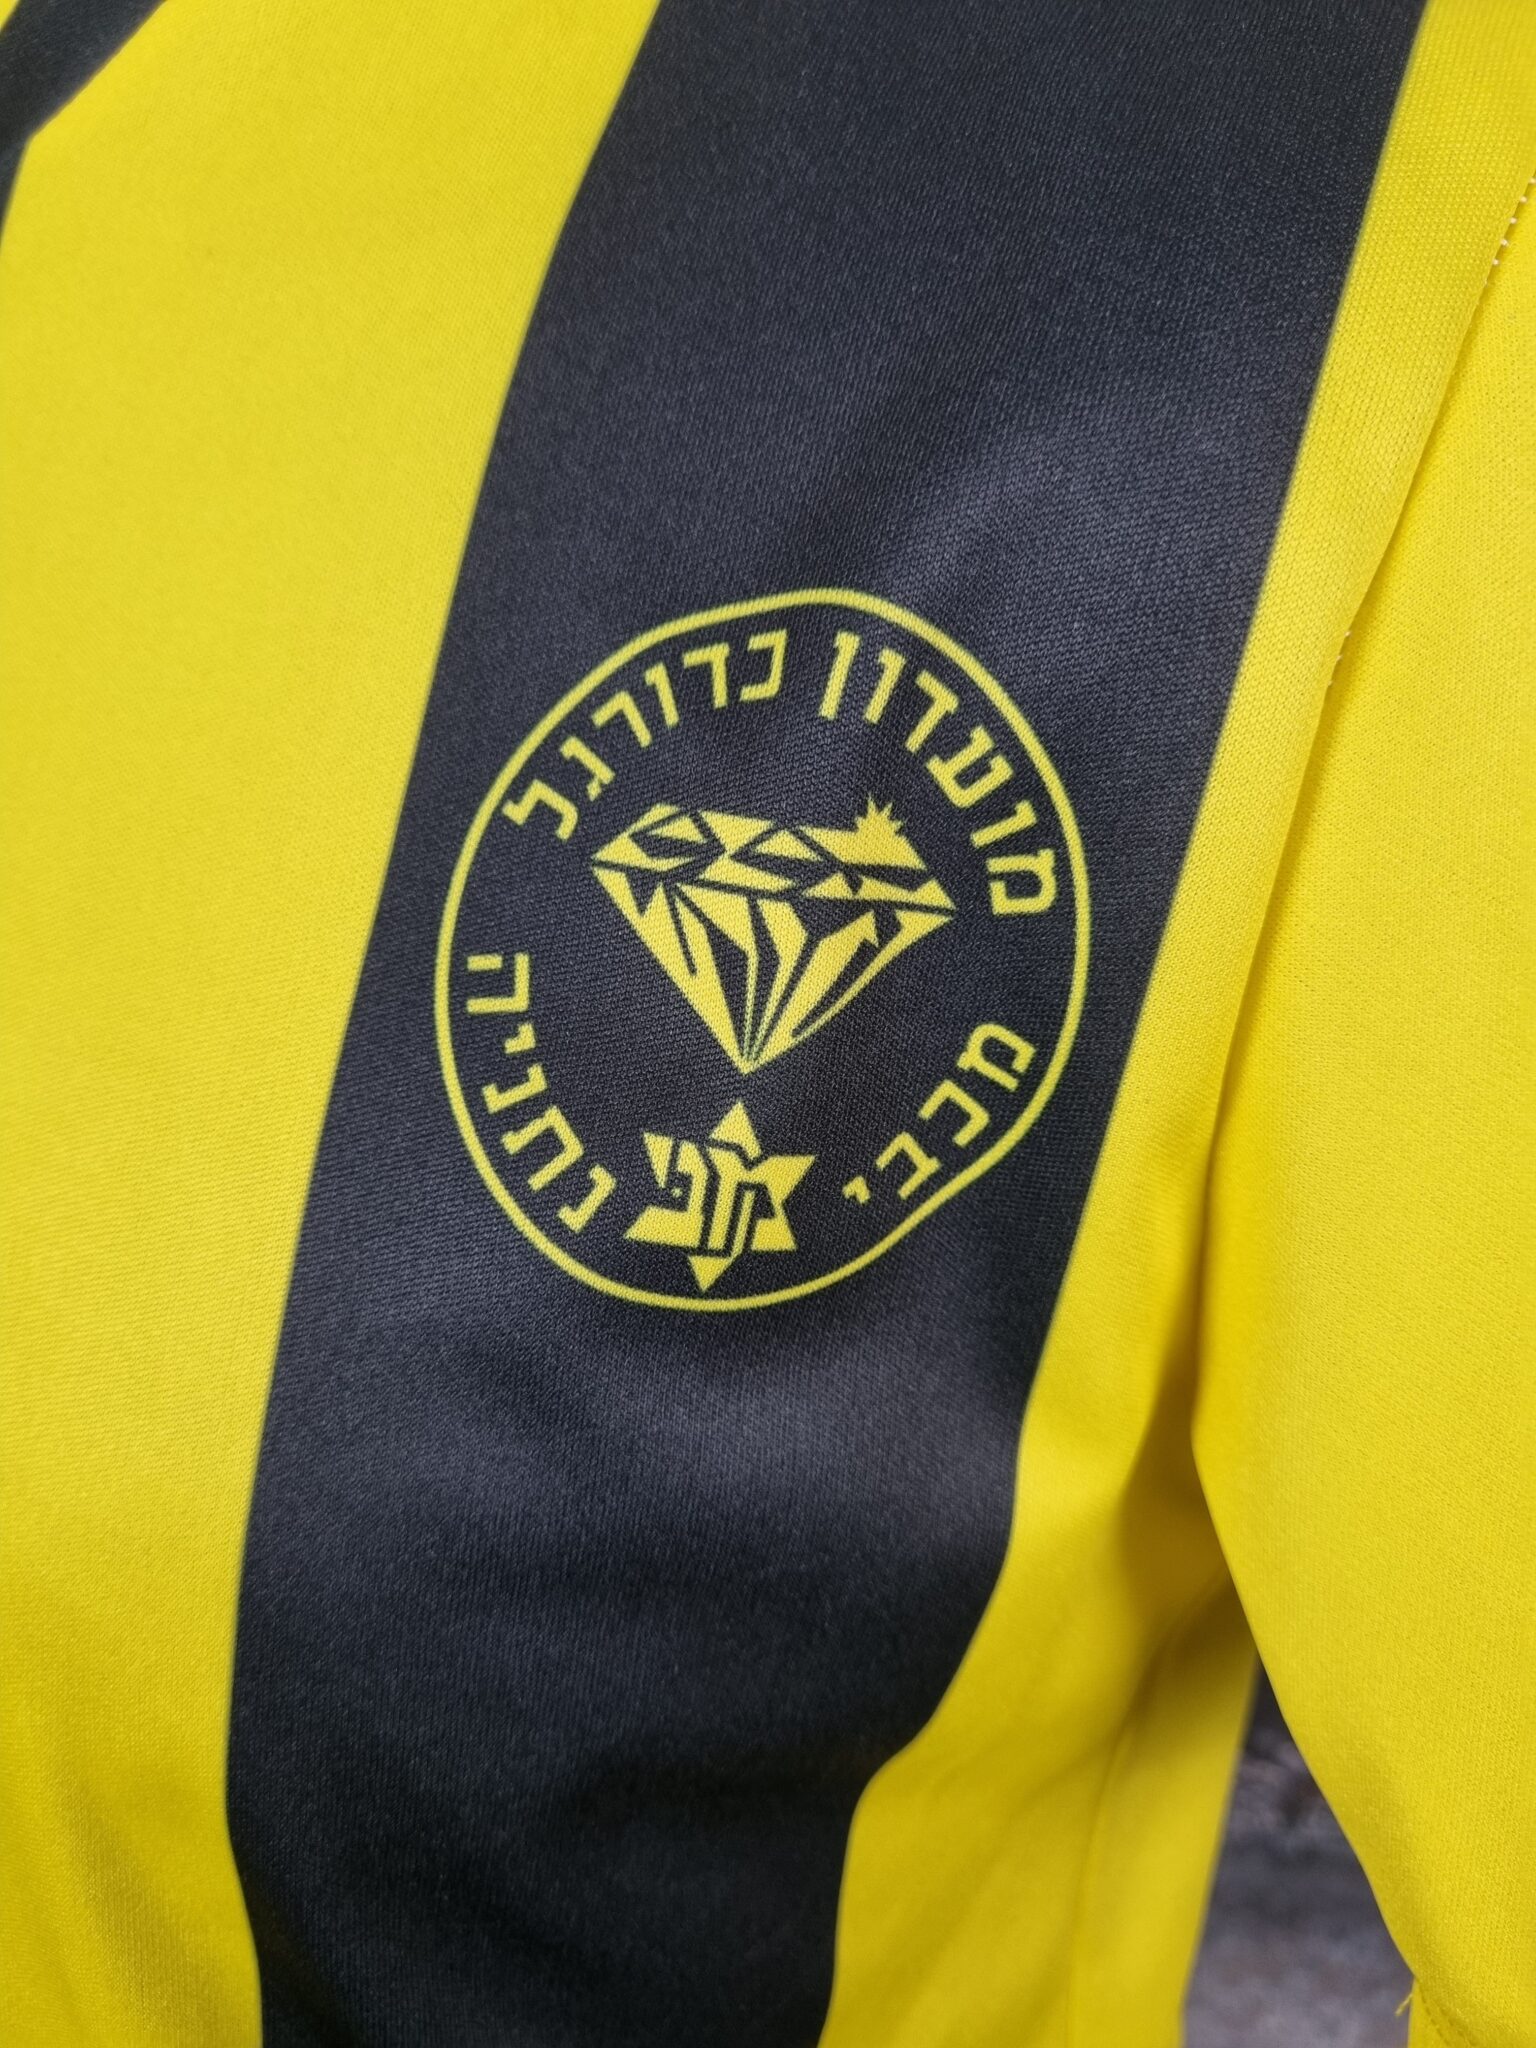 Maccabi Netanya Home Football Shirt 1998/1999 Vintage Jersey Israel Retro מכבי נתניה - Sport Club Memories